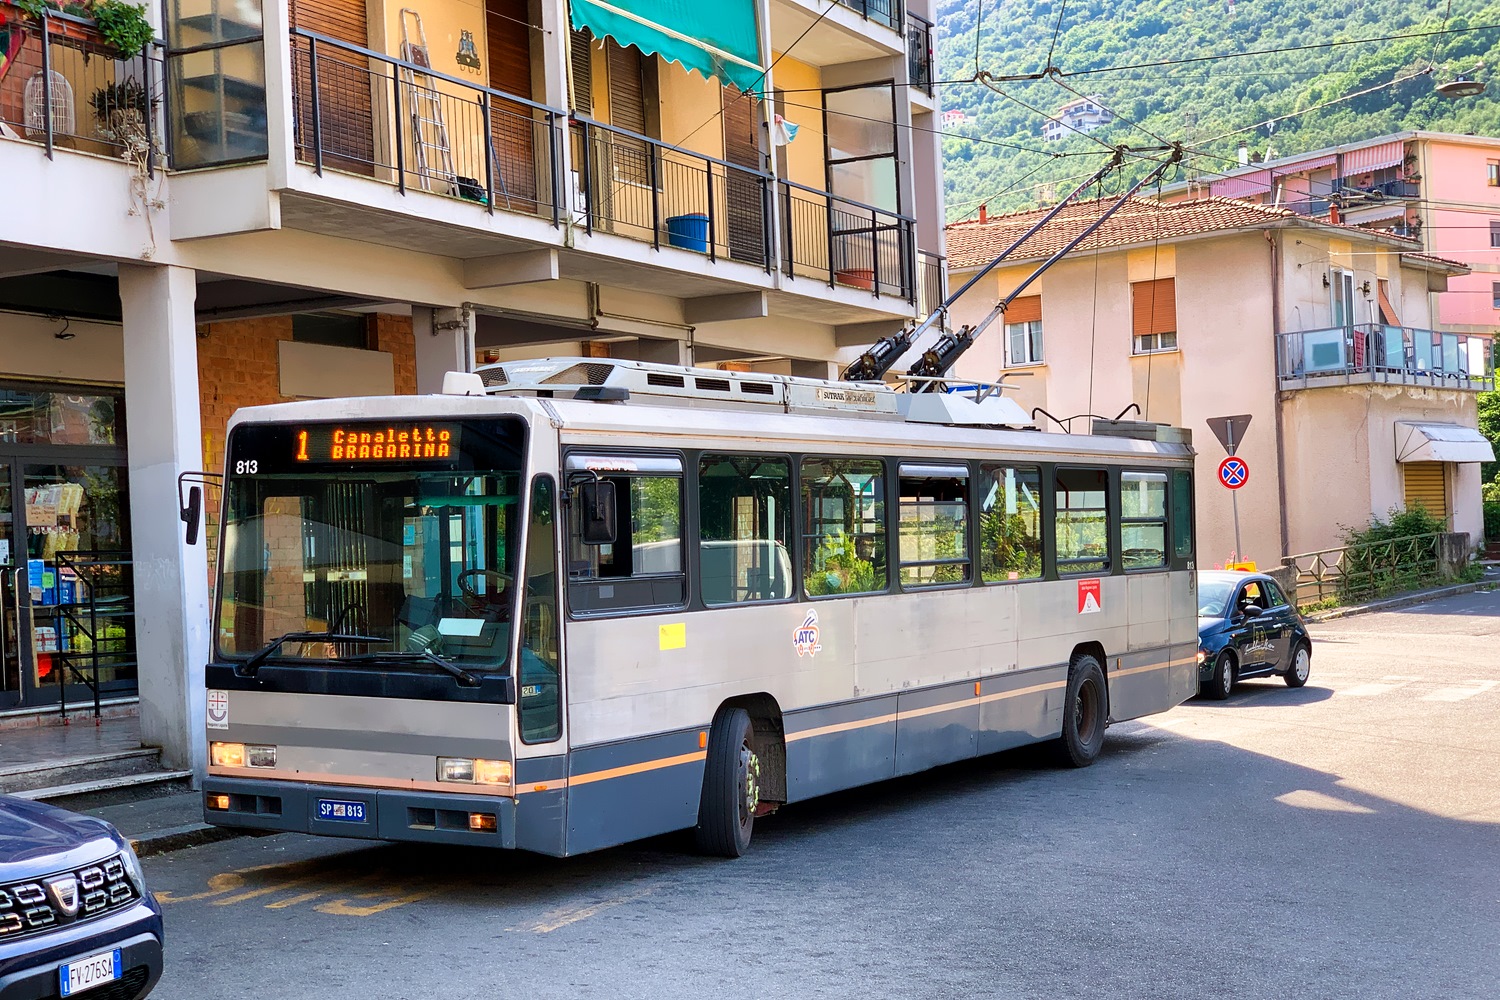 La Spezia, Bredabus 4001.12 N°. 813